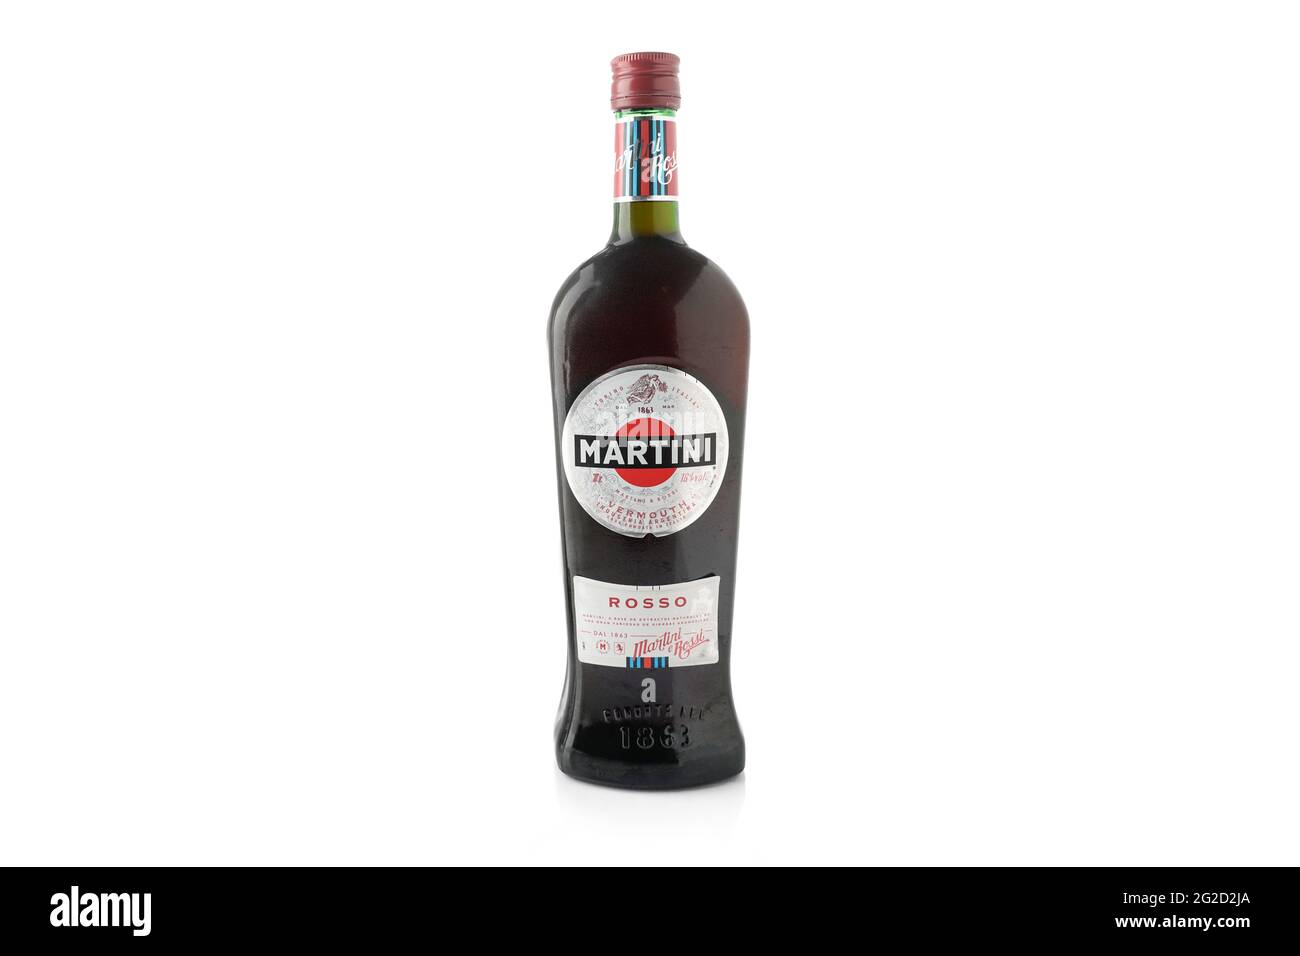 Martini rosso vermouth bottle on white background. Alcoholic beverage. Stock Photo